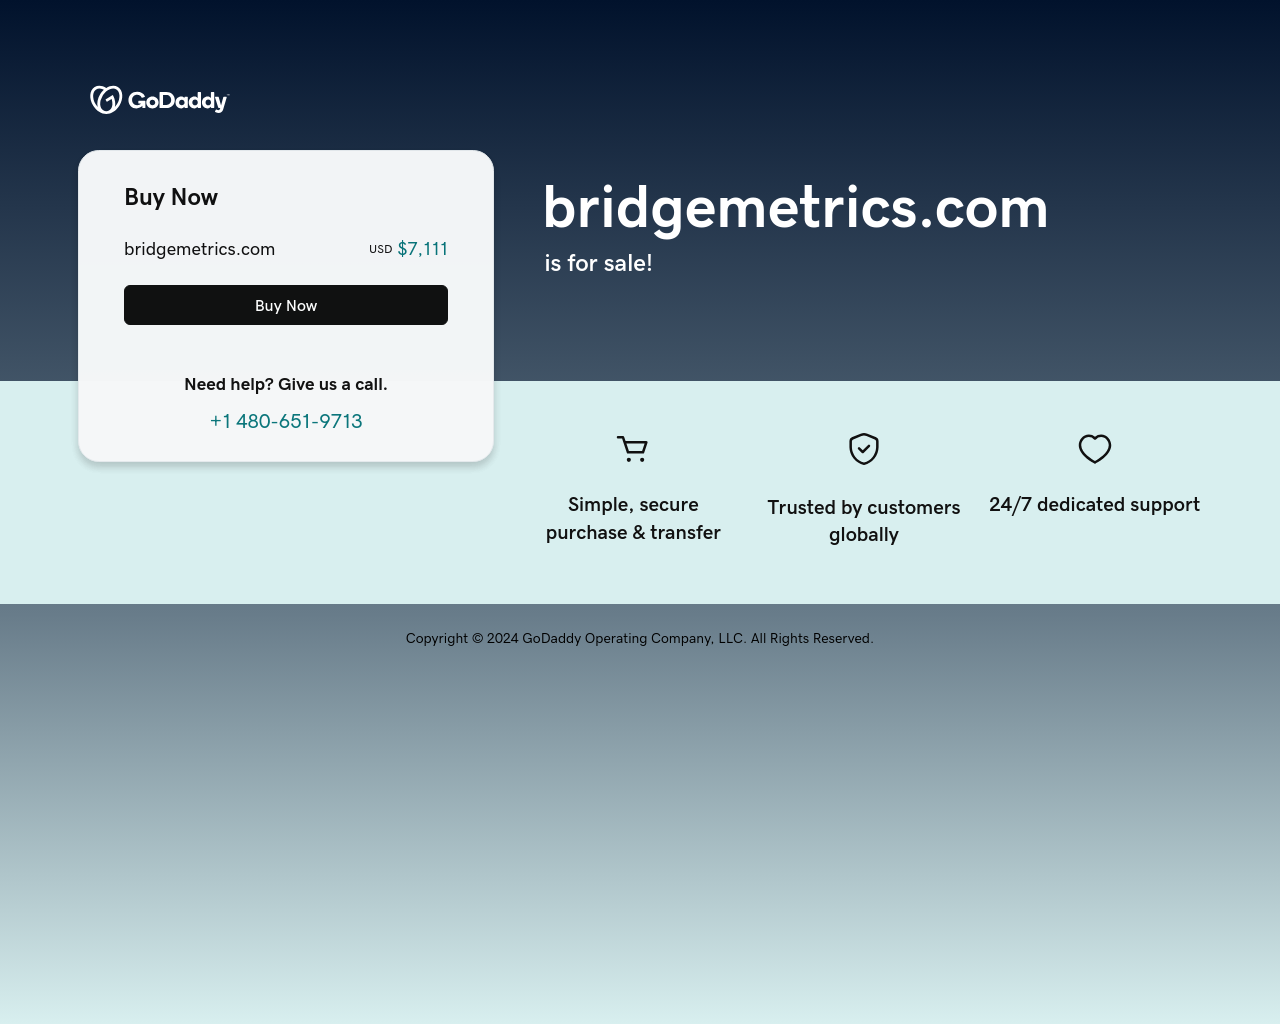 bridgemetrics.com